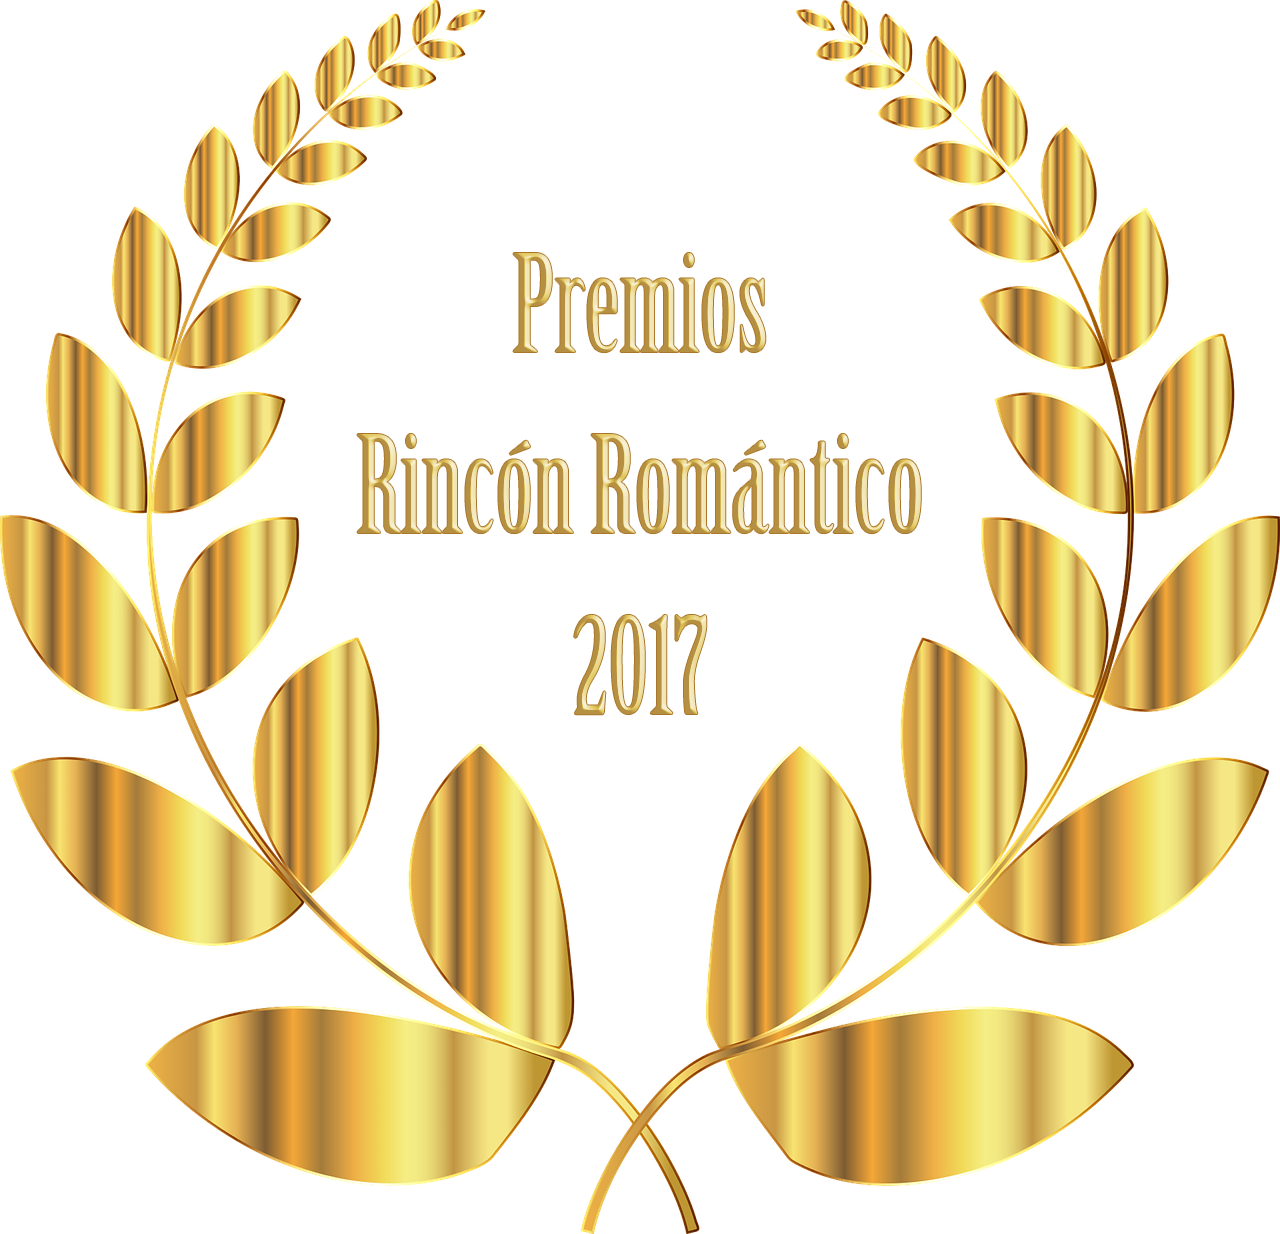 premios-rr-2017